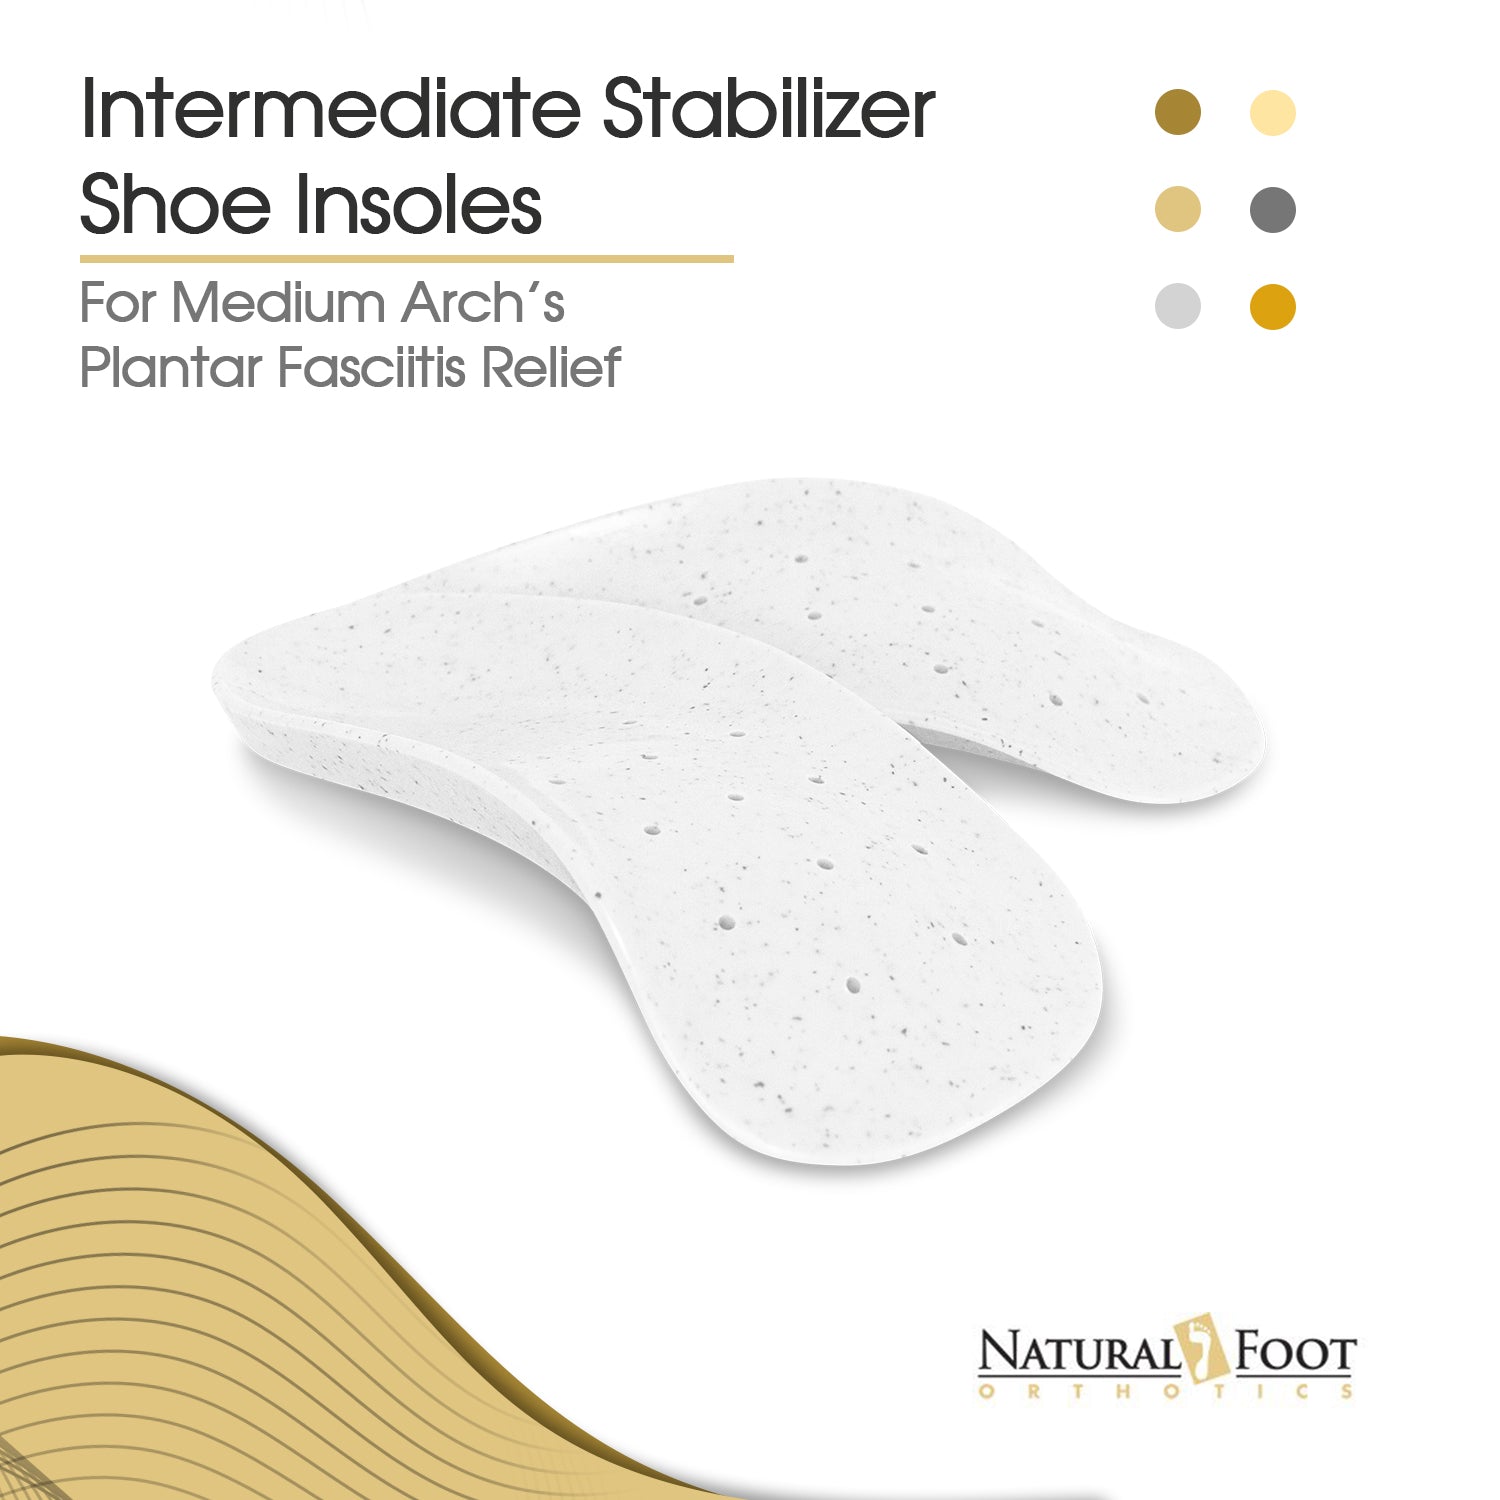 Intermediate Stabilizer | Arch Support Insert for Medium Arches